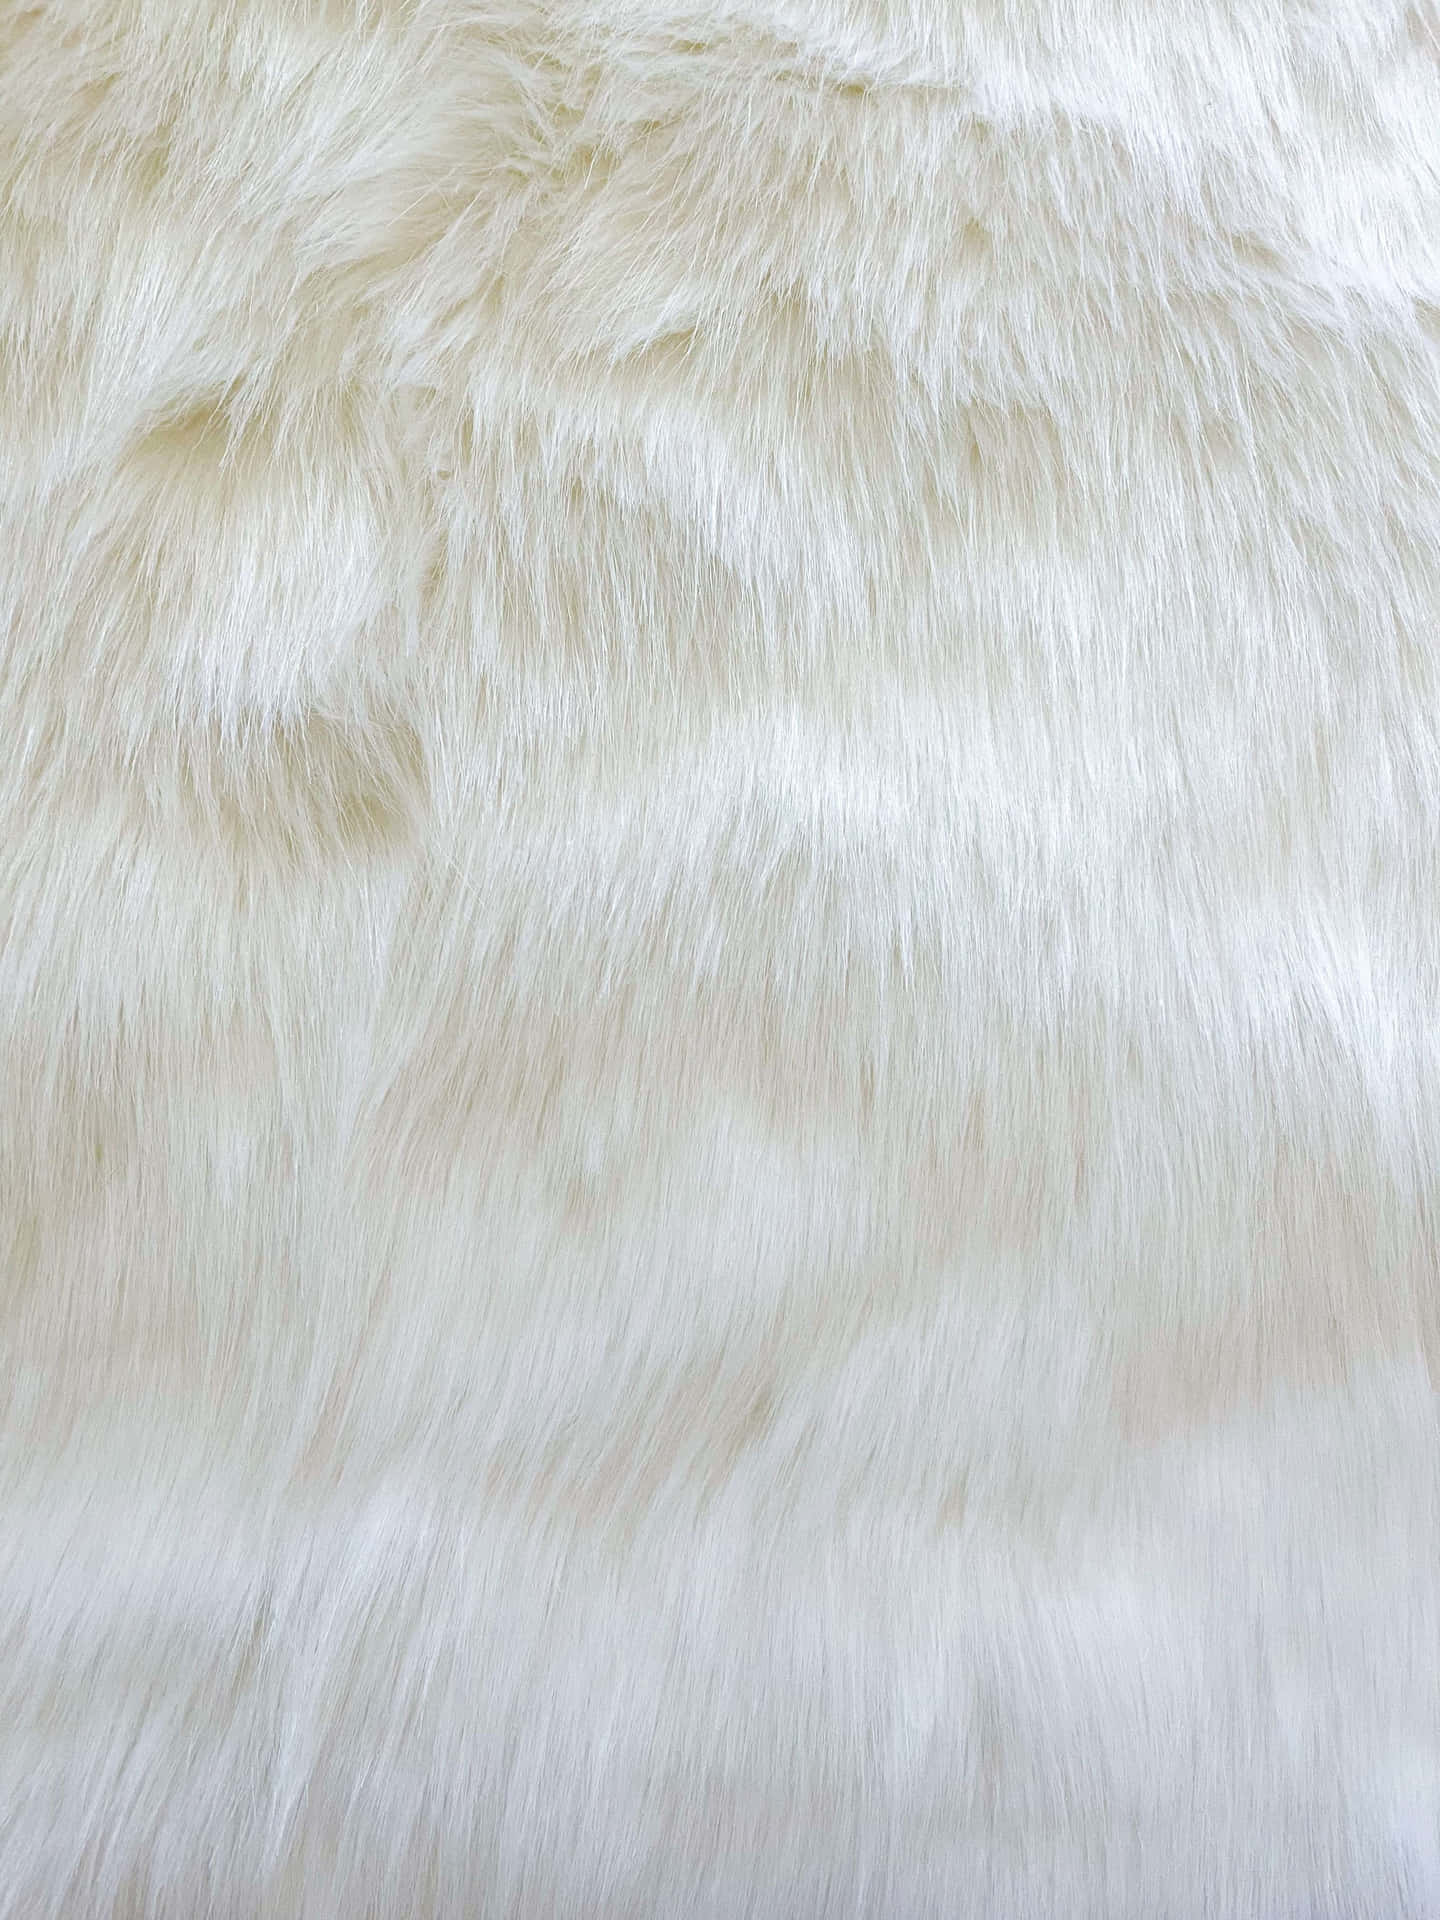 White Faux Fur Texture Wallpaper